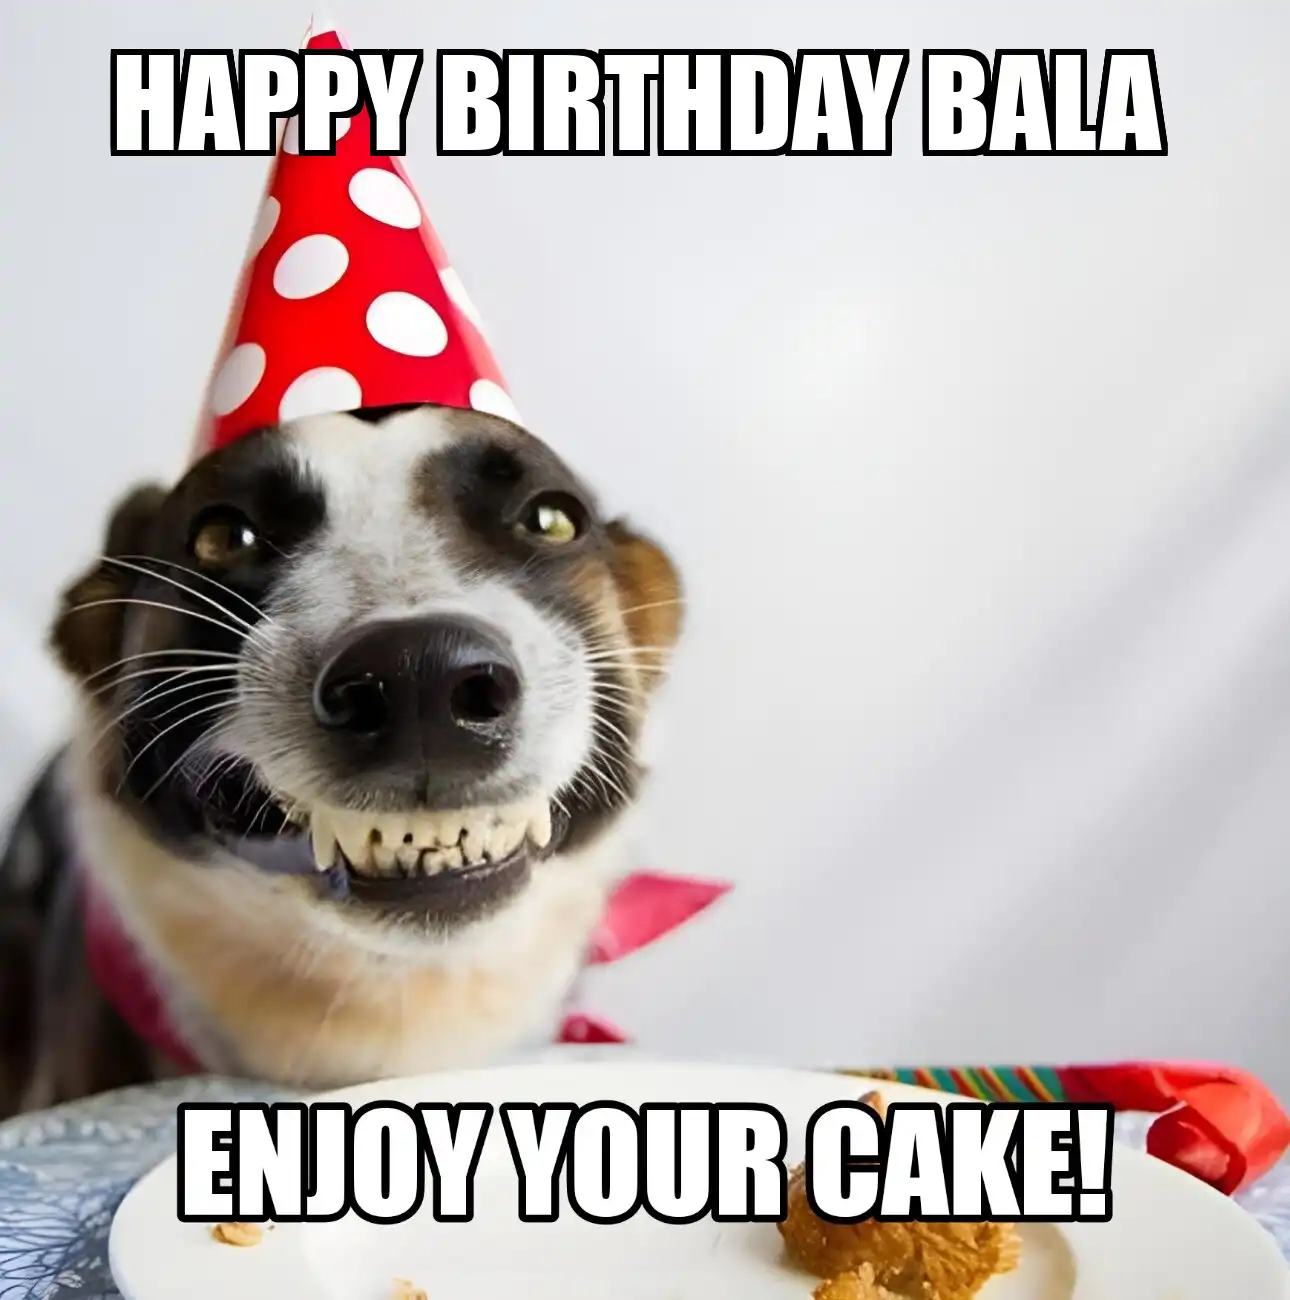 Happy Birthday Bala Enjoy Your Cake Dog Meme